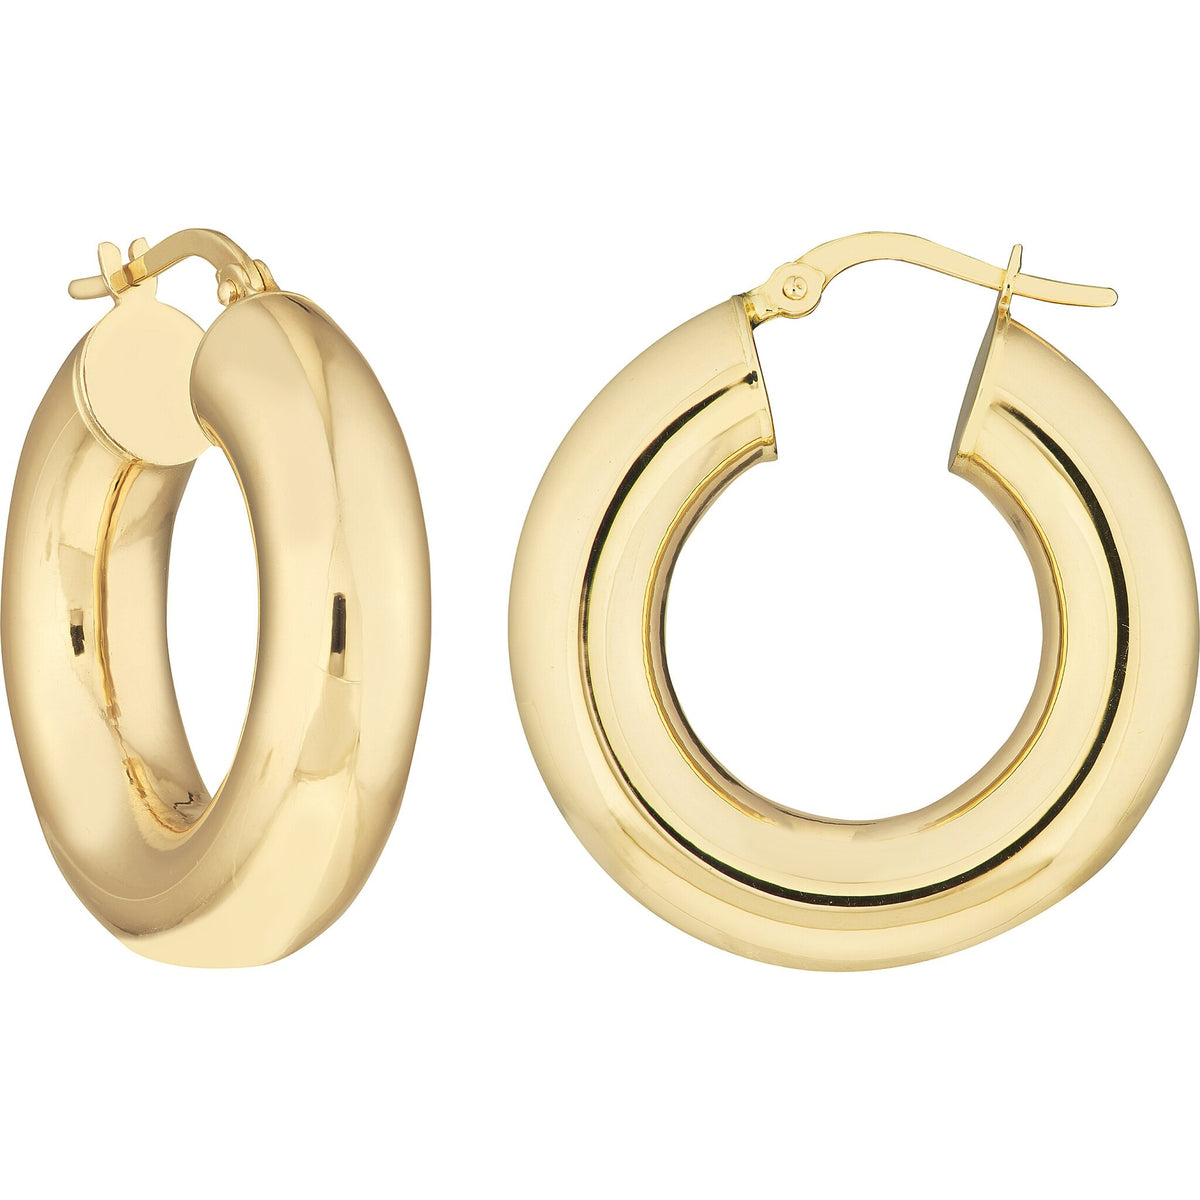 Olas d'Oro Earrings - 14K Yellow Gold Round High Polished Hoop Earrings